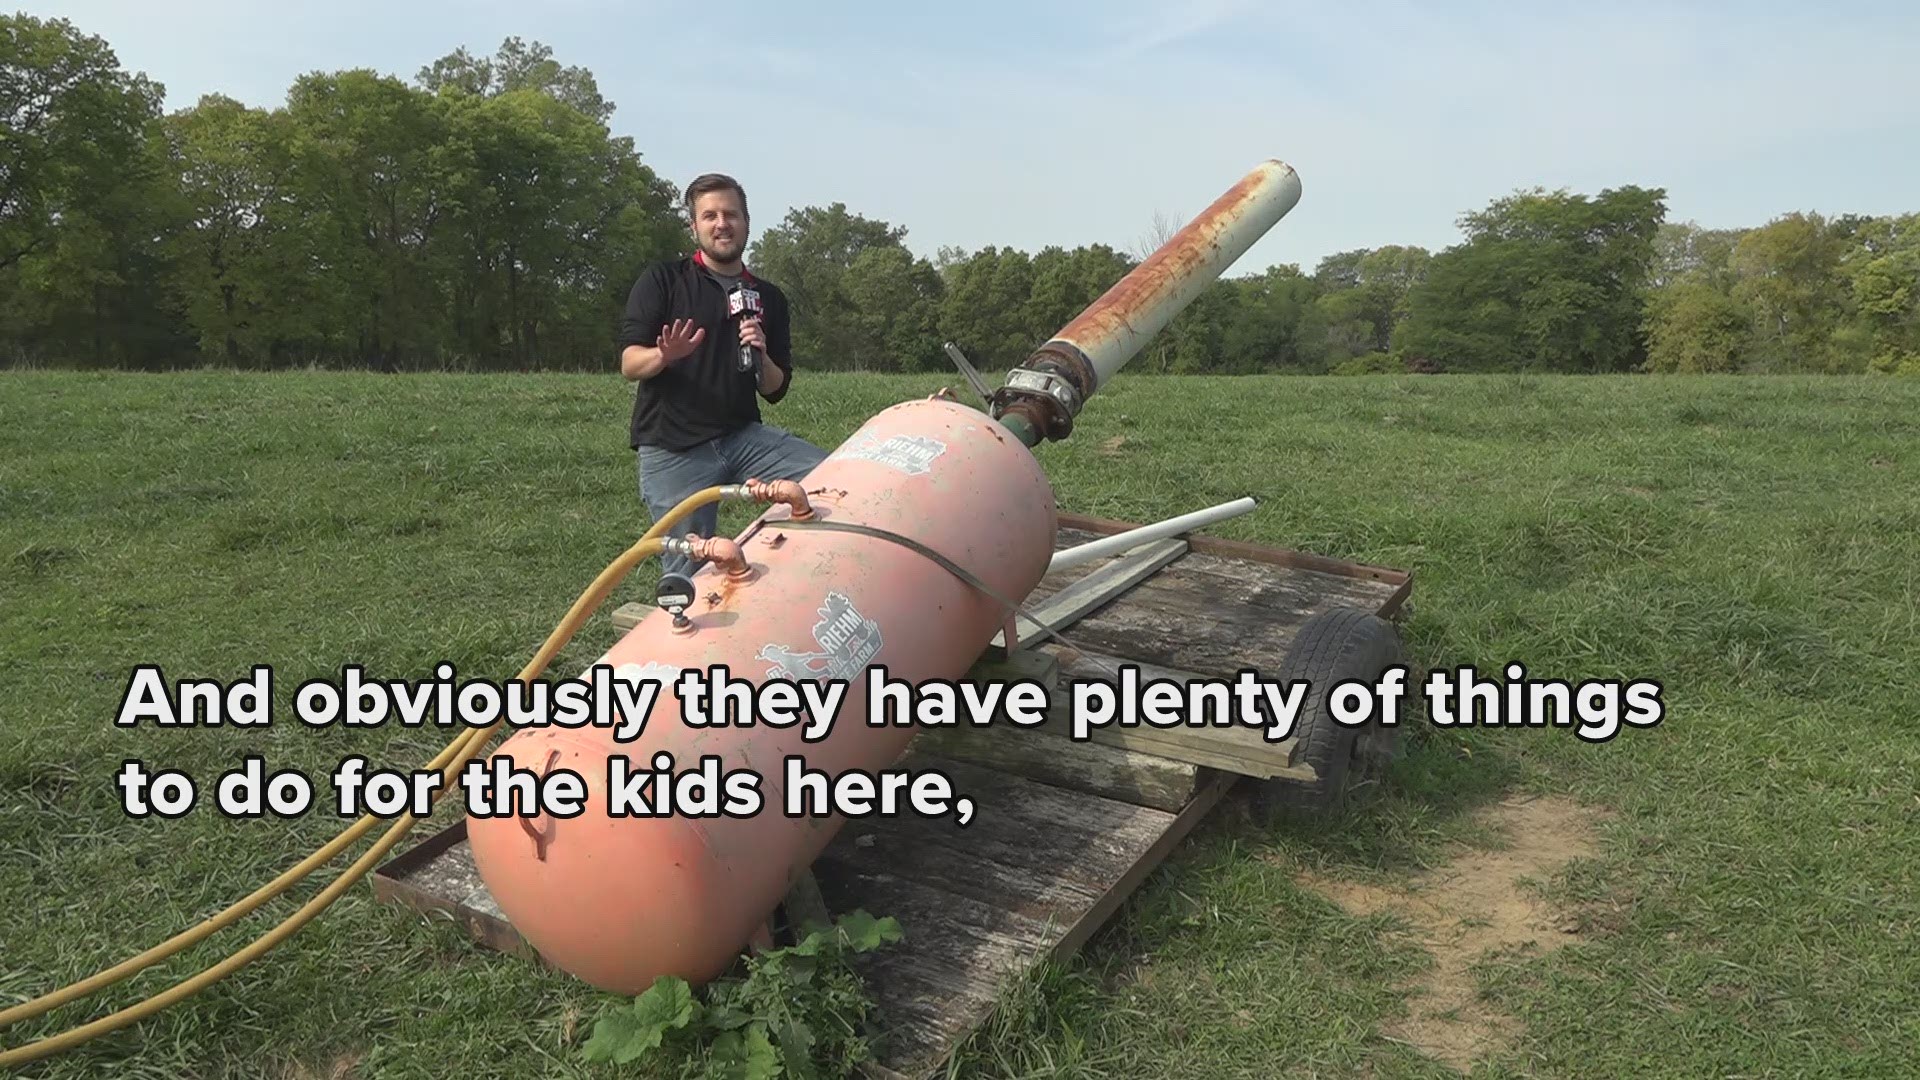 The Riehm's pumpkin cannon can launch a pumpkin over 500 yards